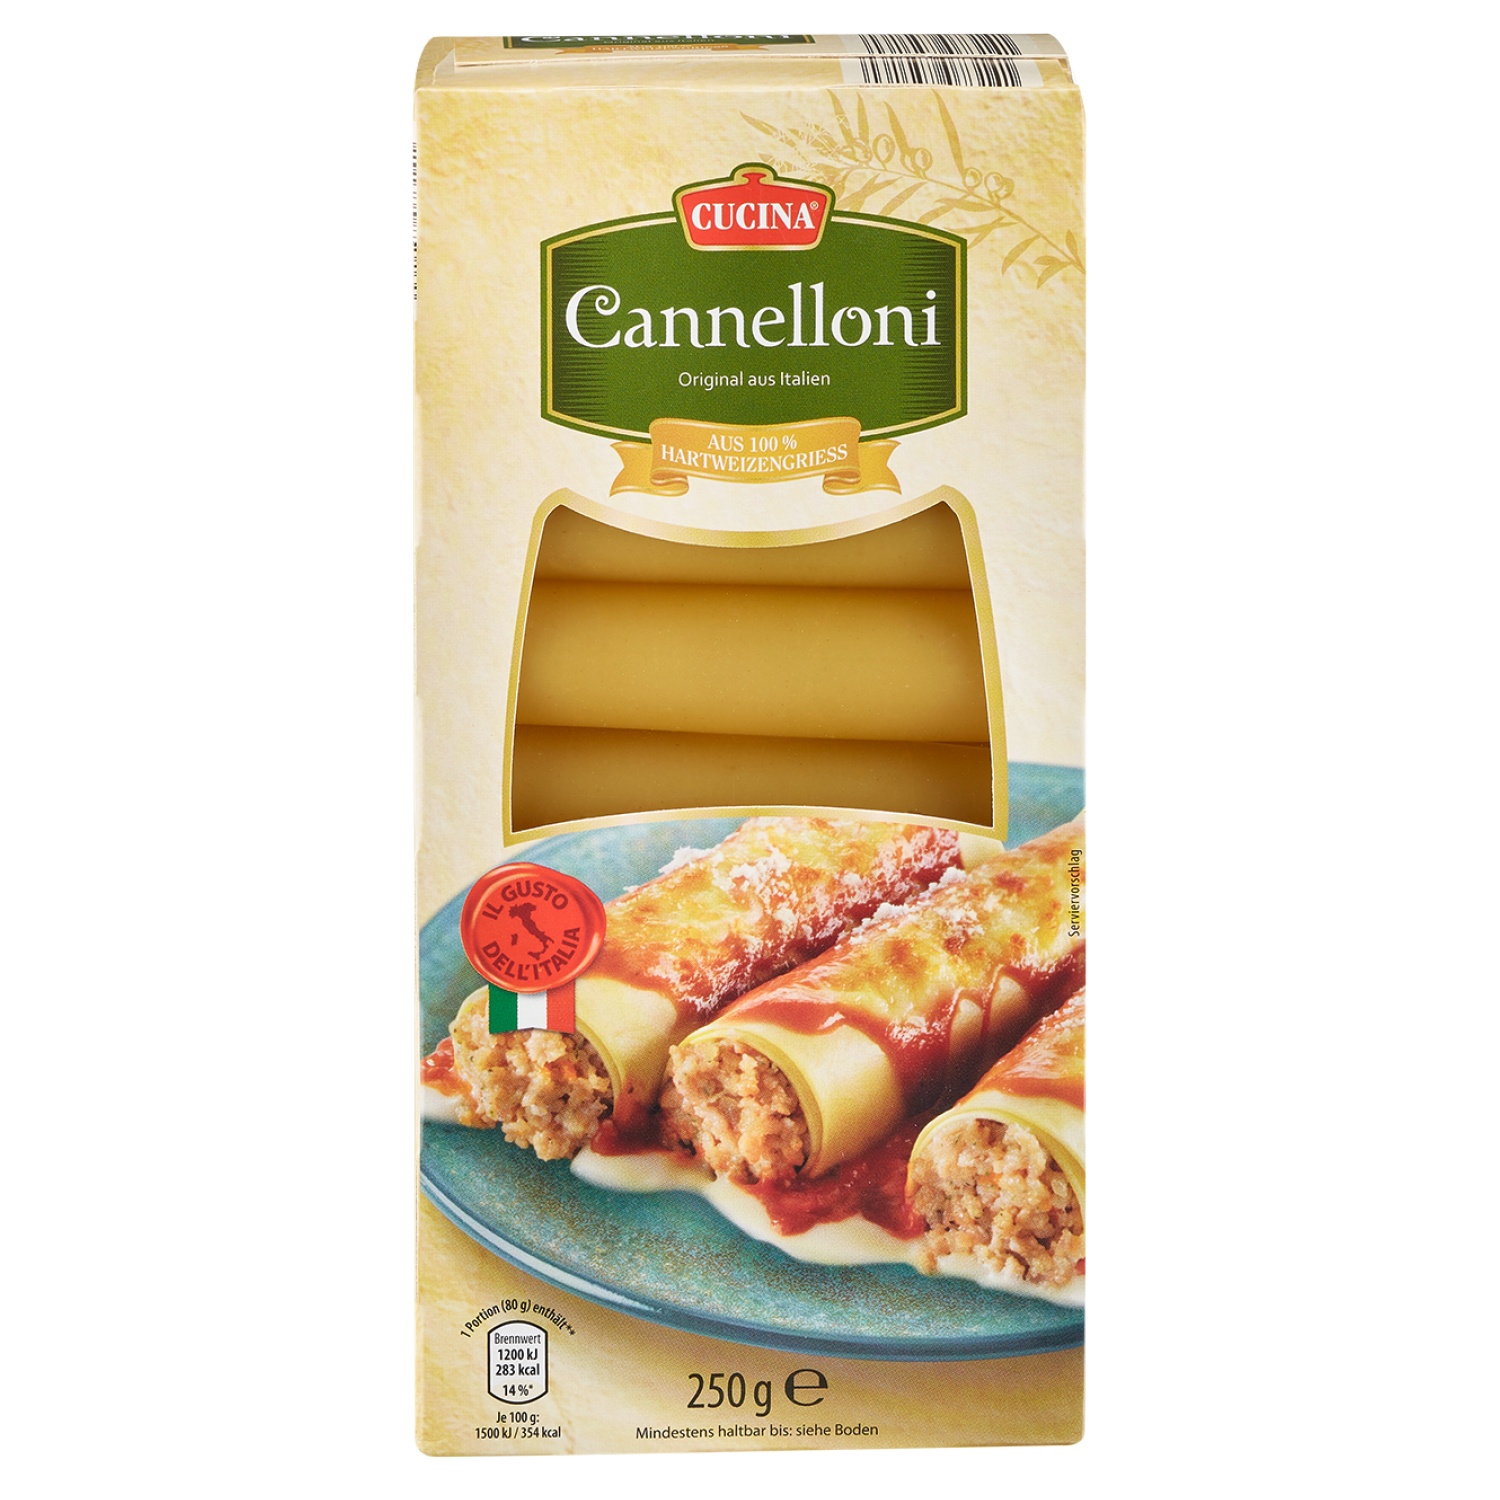 CUCINA® Cannelloni 250g